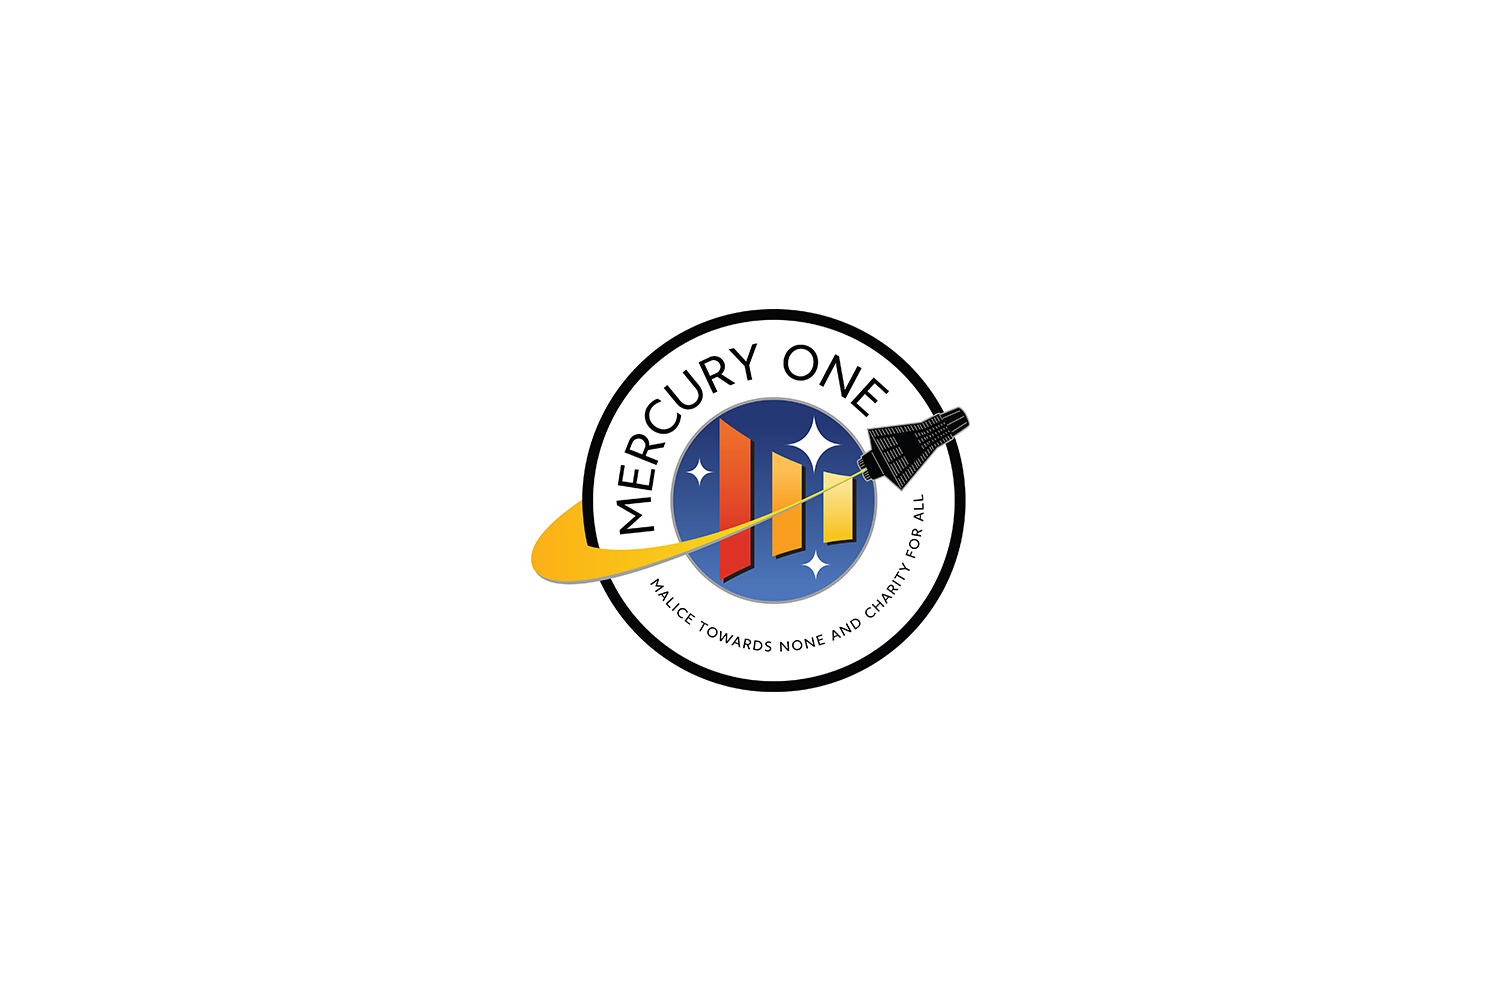 Mercury One logo.jpg